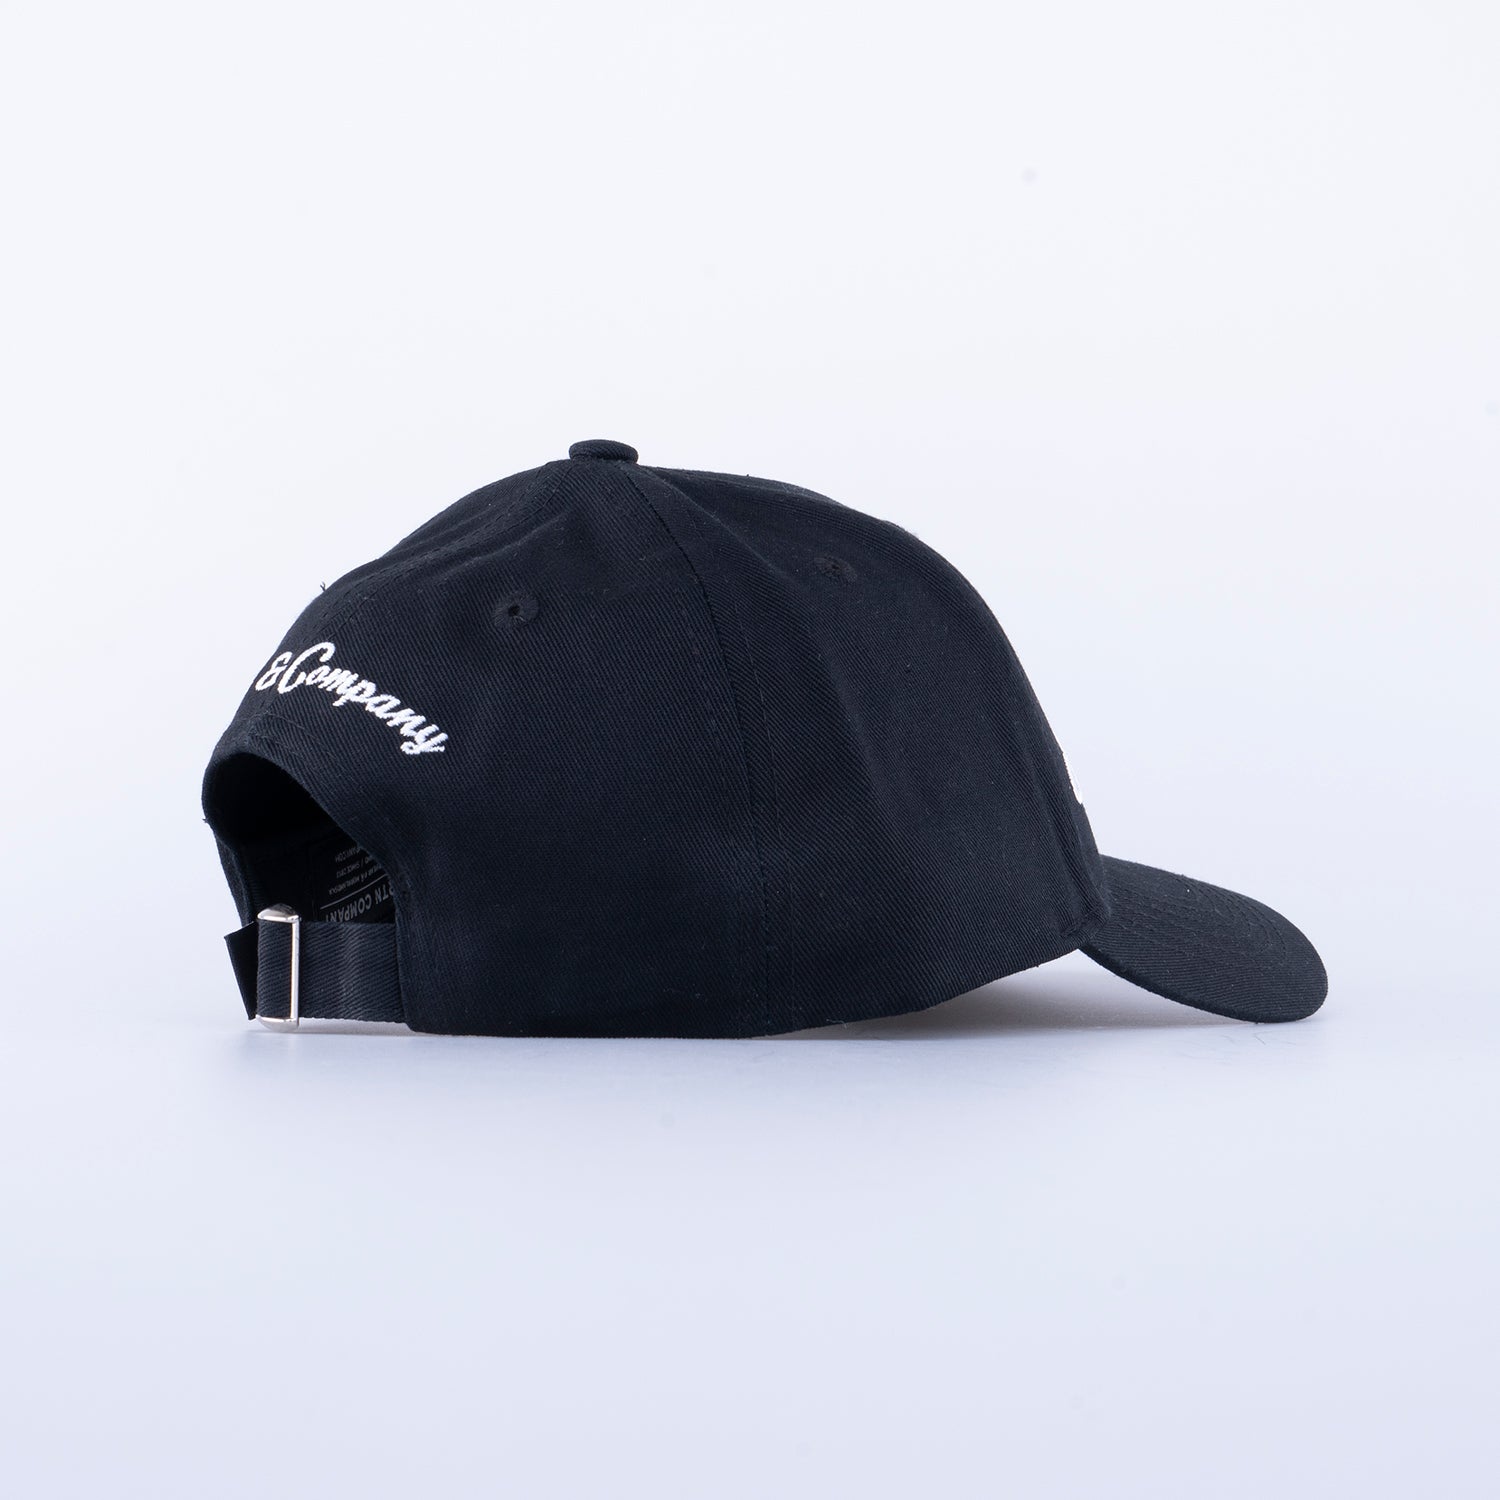 GREAT NORRLAND CAP - HOOKED BLACK